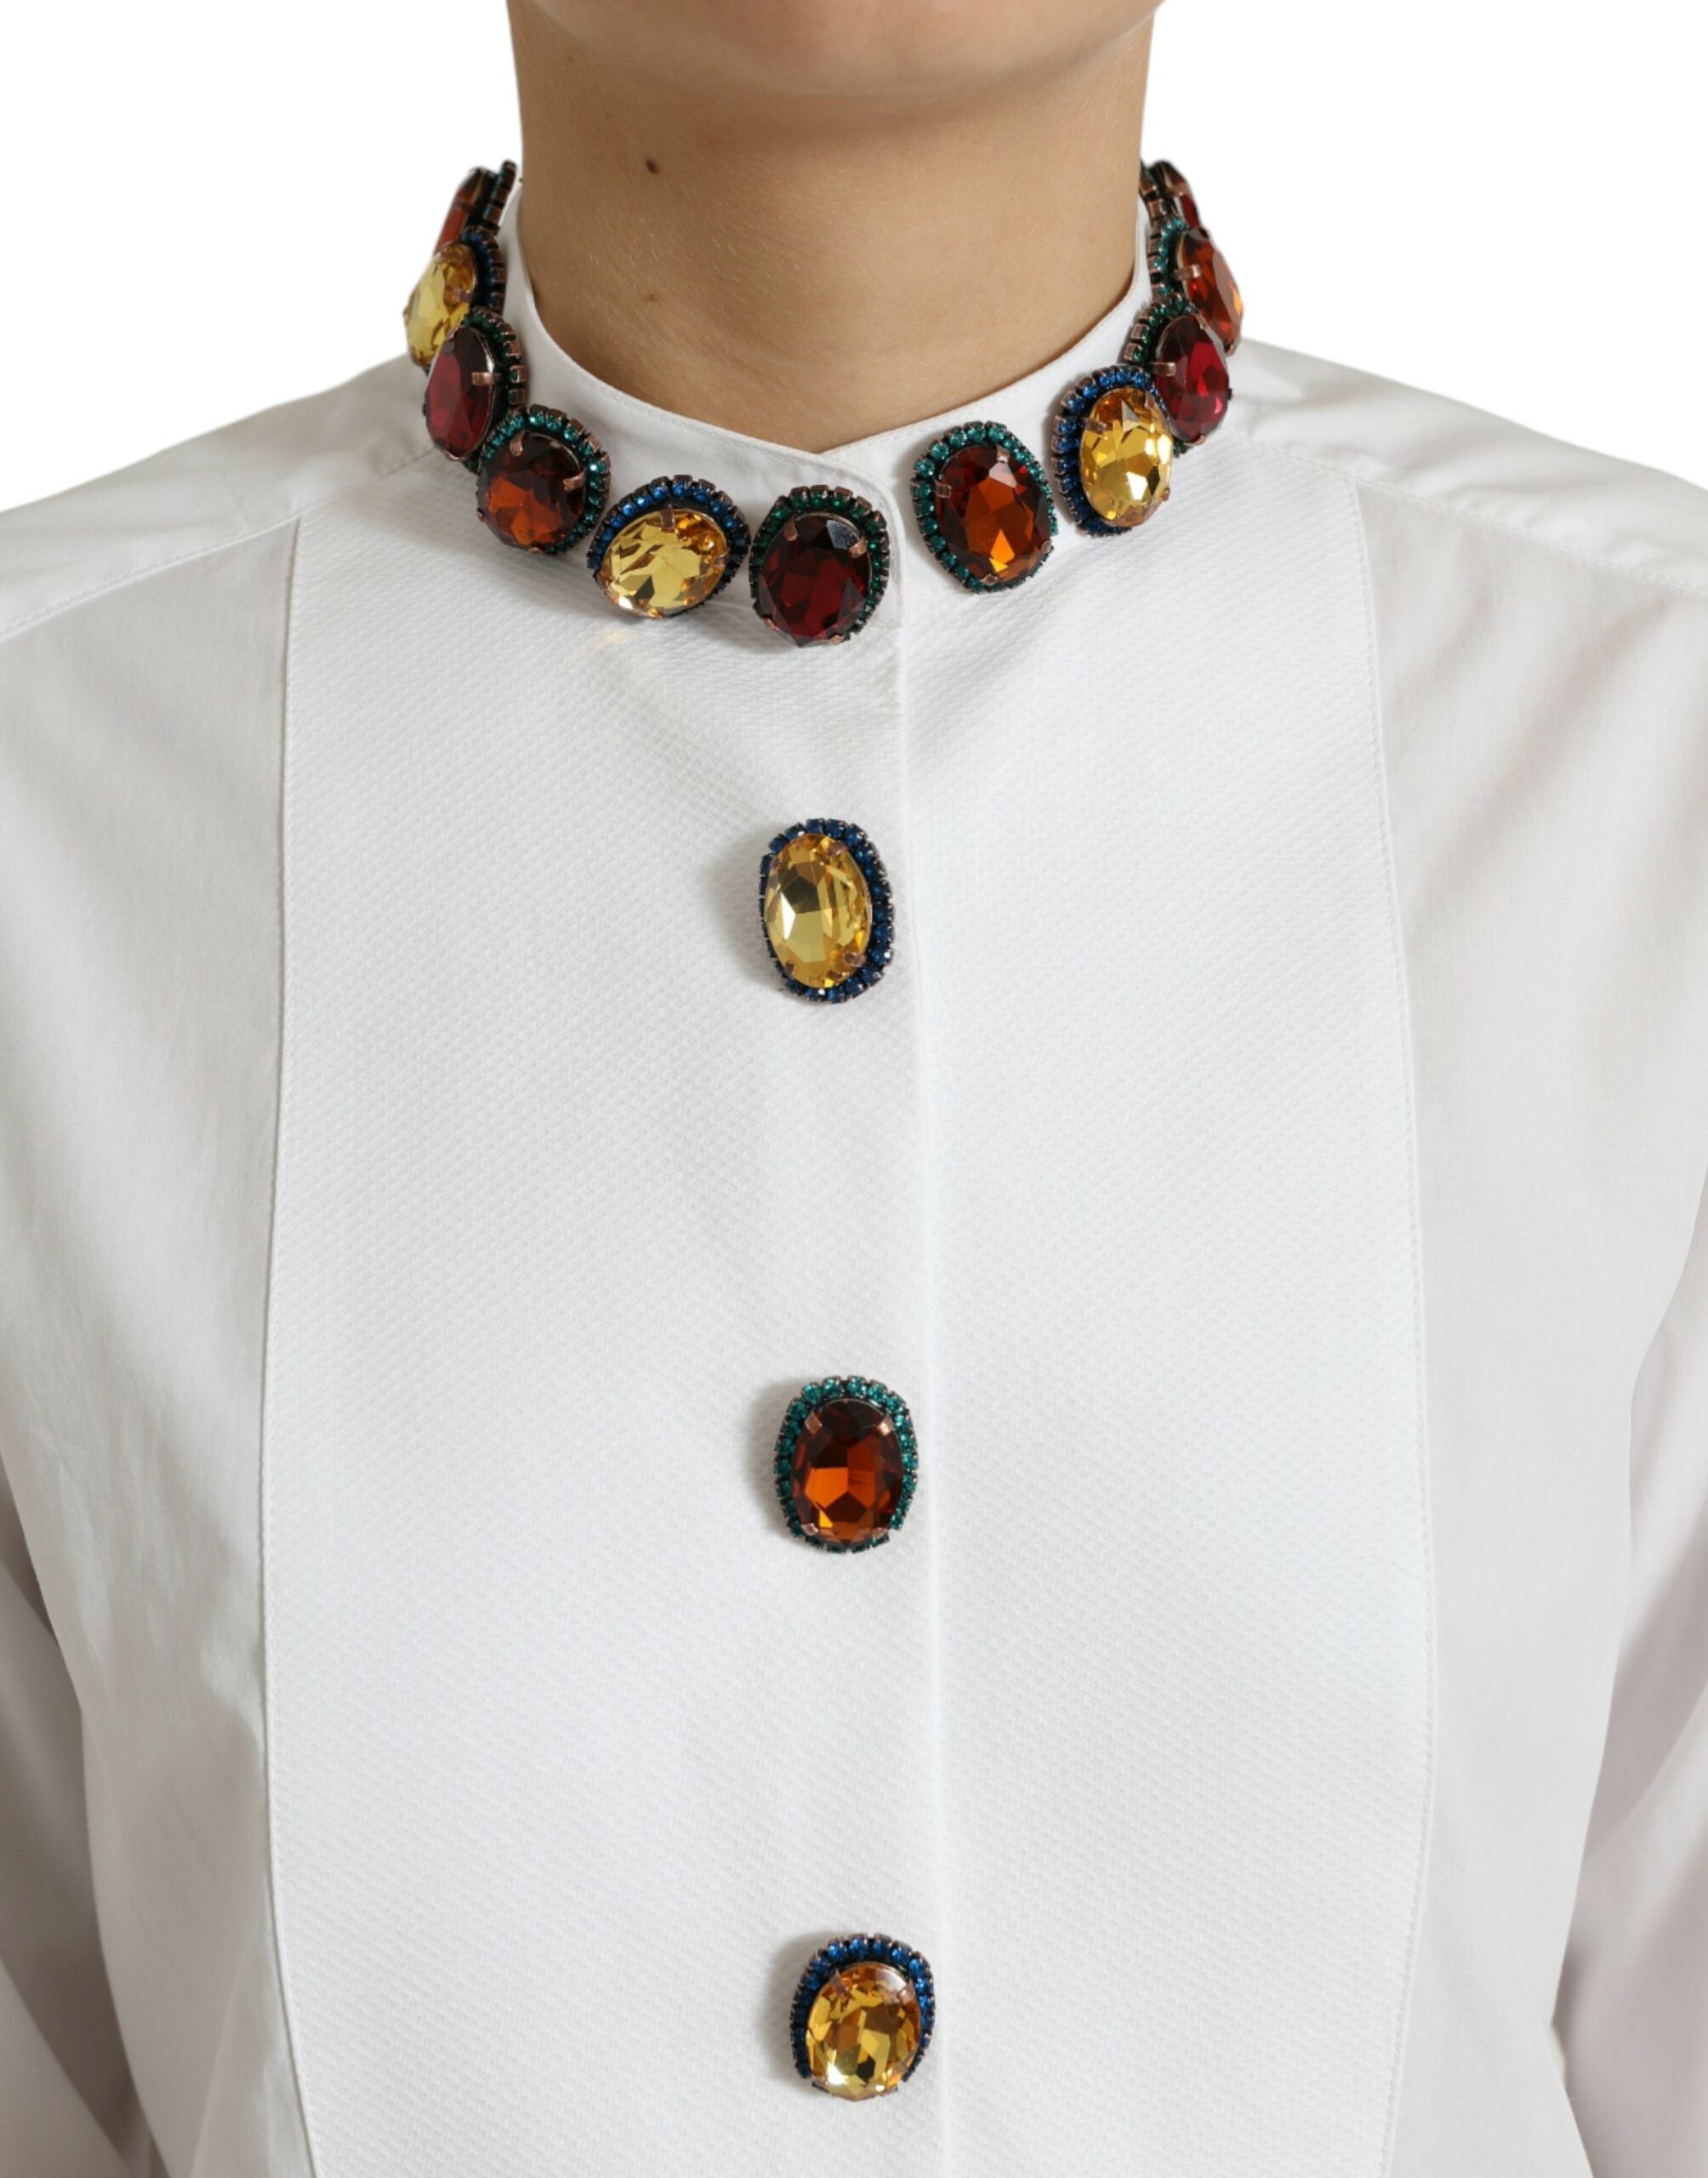 Dolce & Gabbana Elegant Crystal-Embellished White Cotton Top